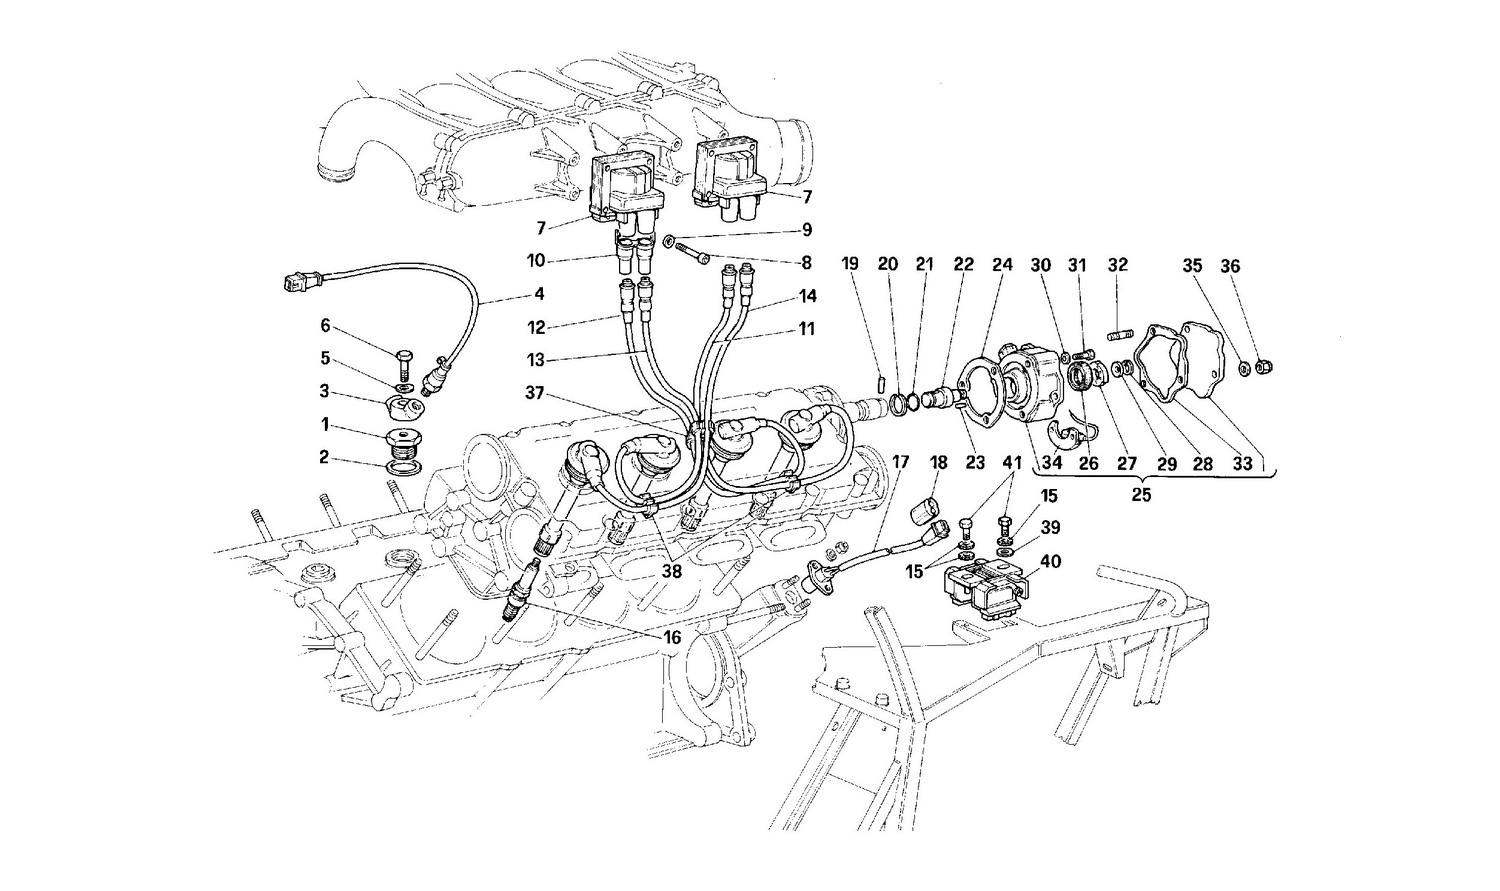 Schematic: Motor Ignition